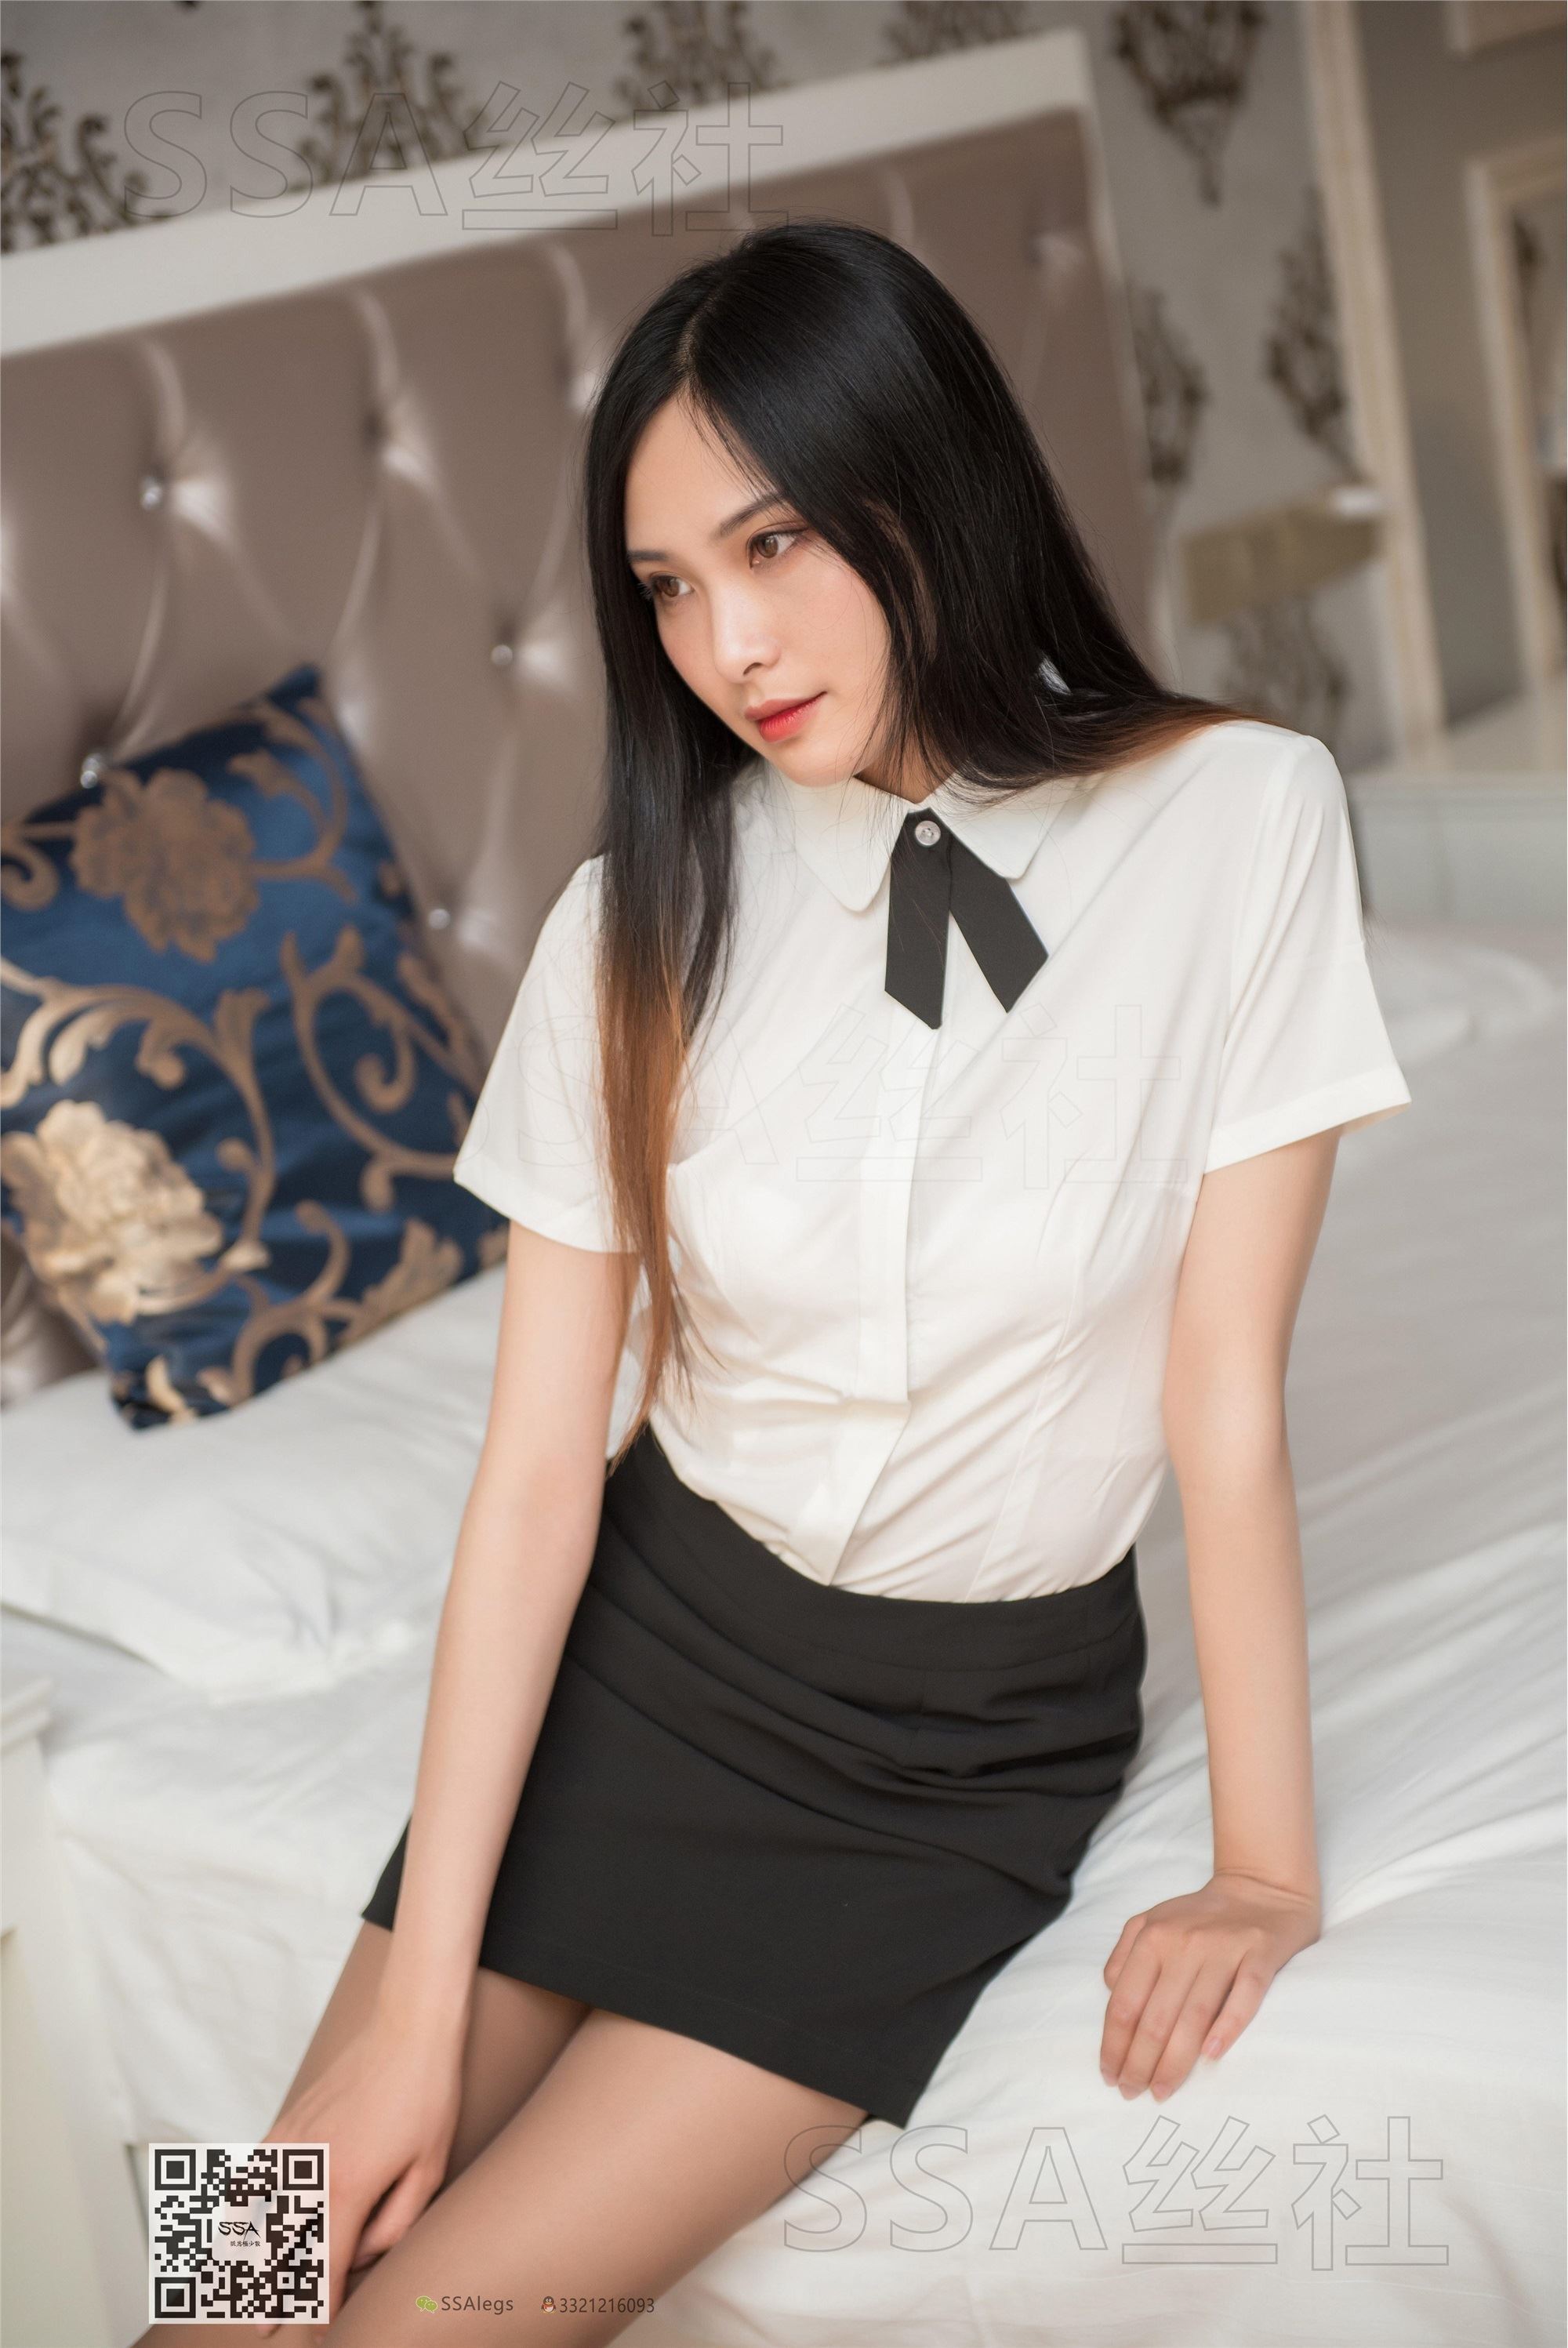 SSA silk society 088 Xiaobai's ol outfit